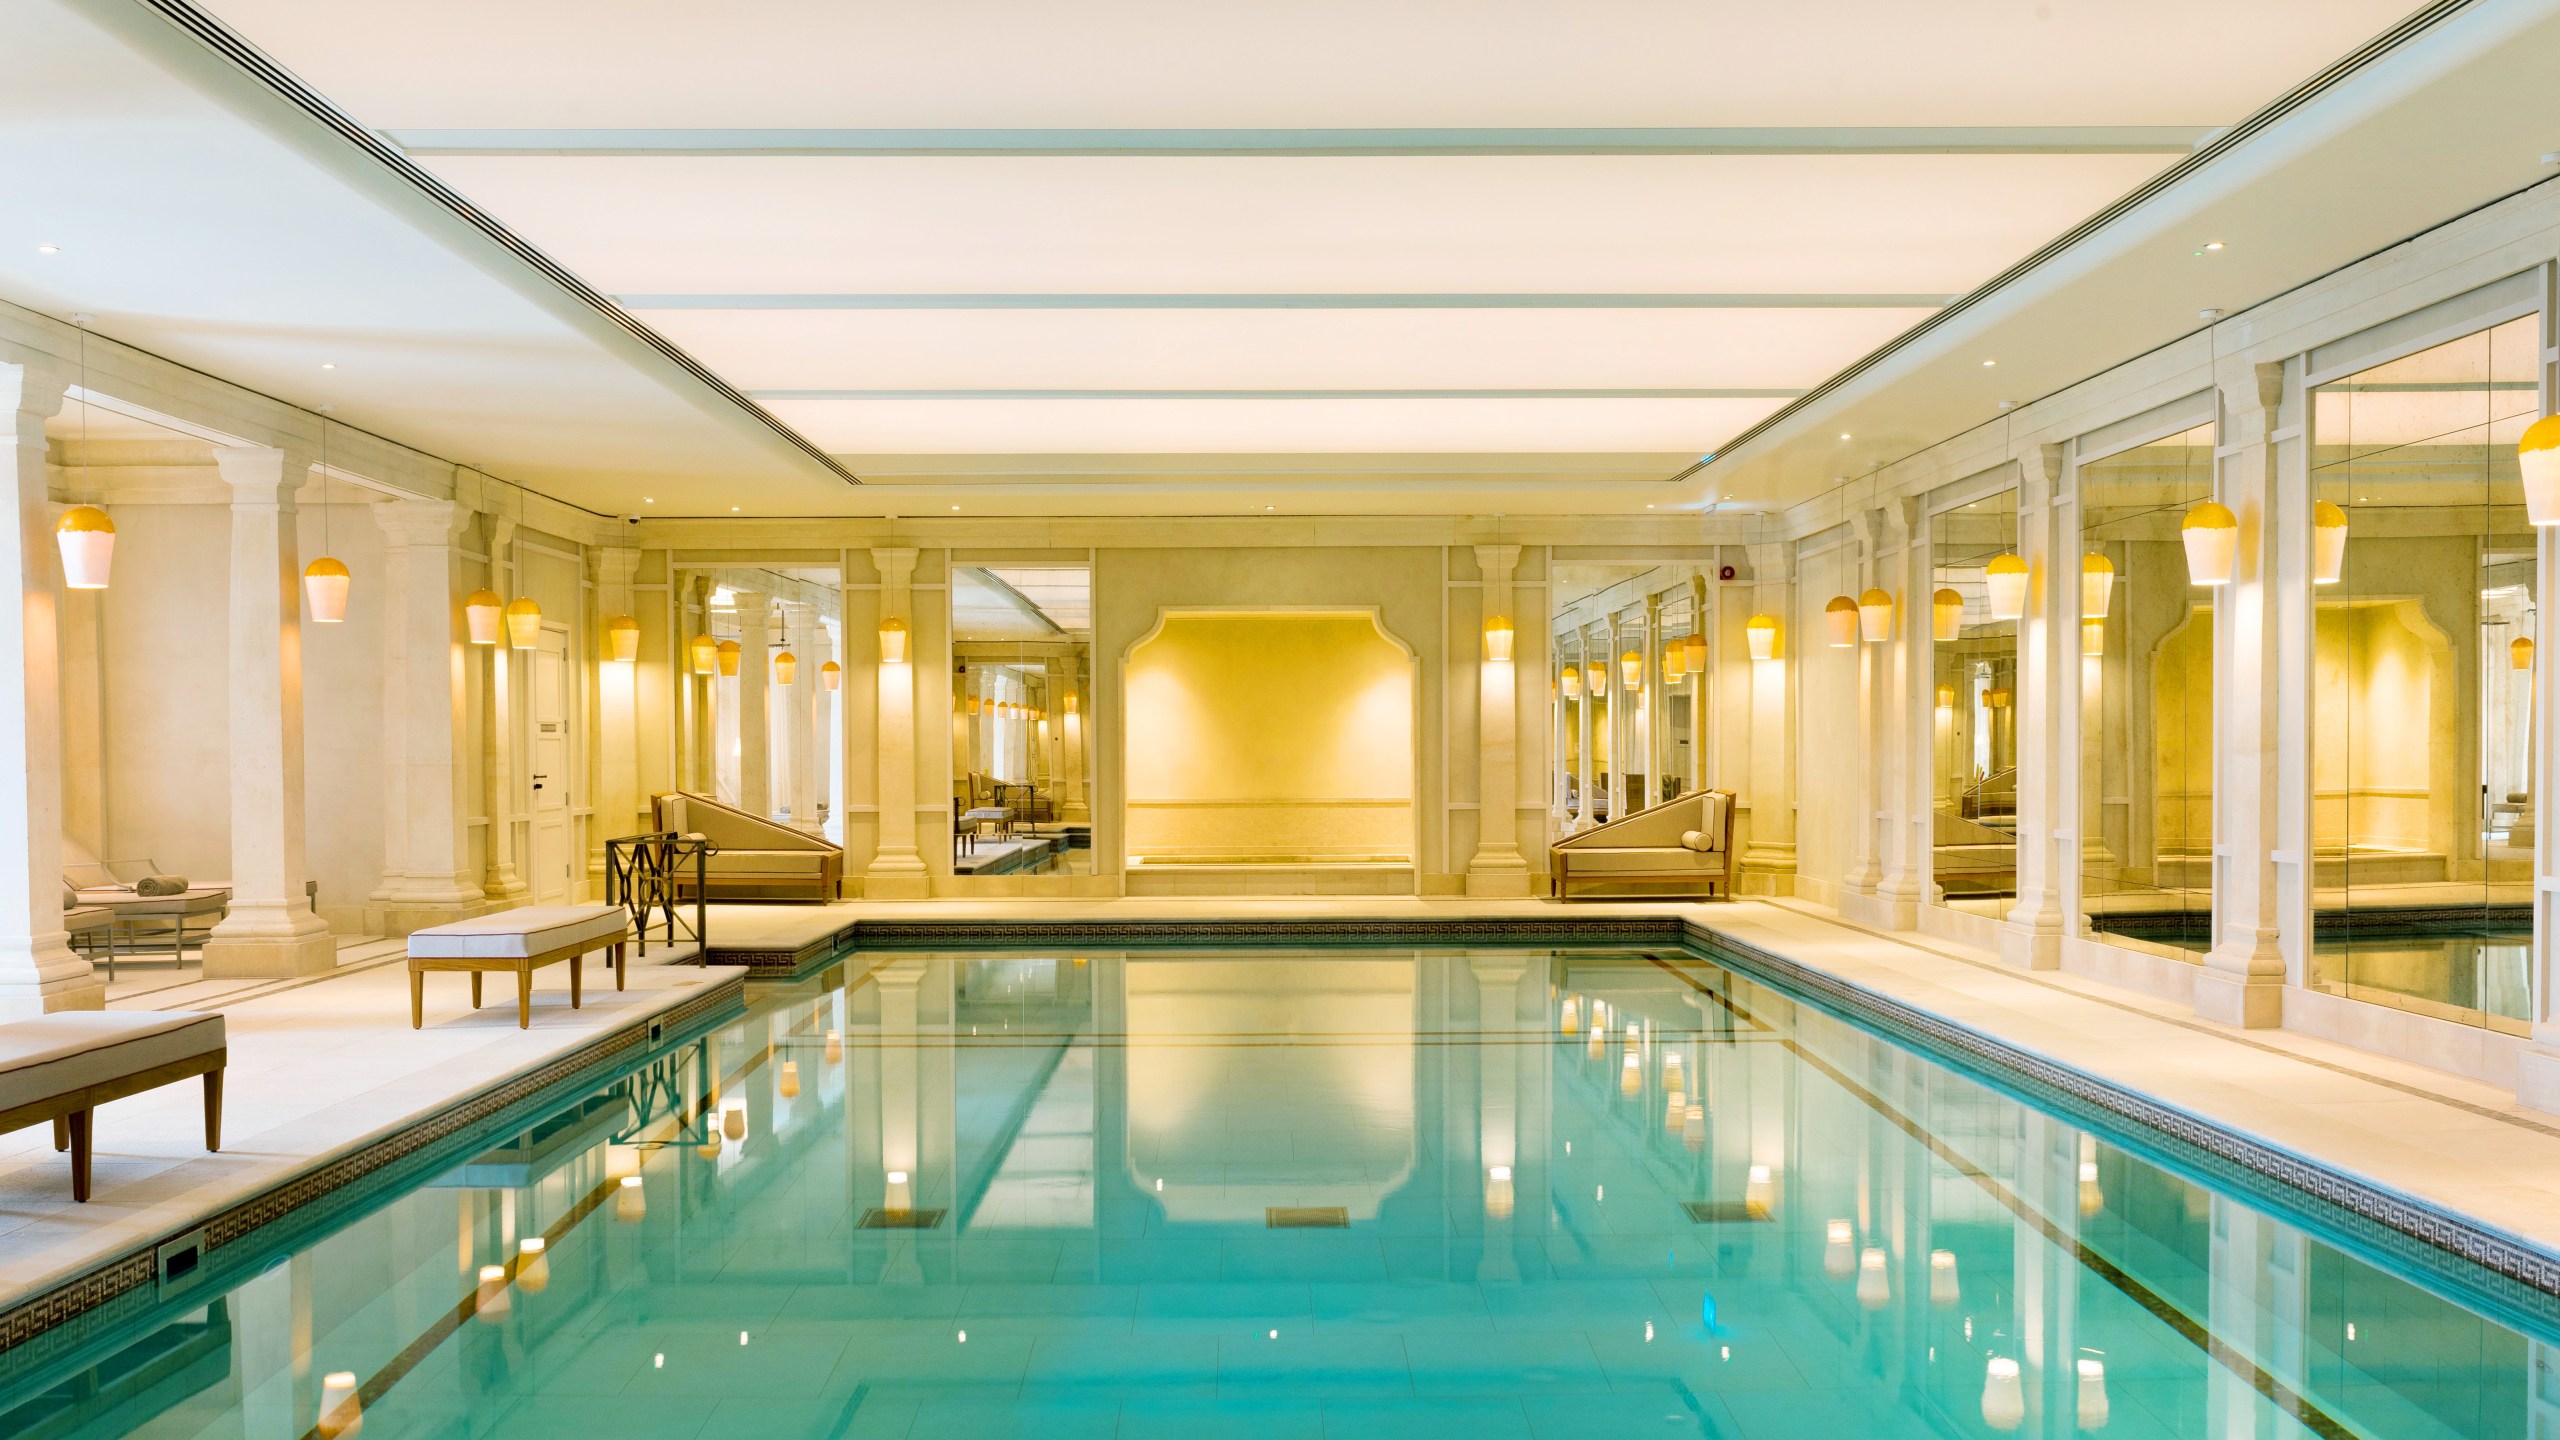 The hotel’s indoor pool